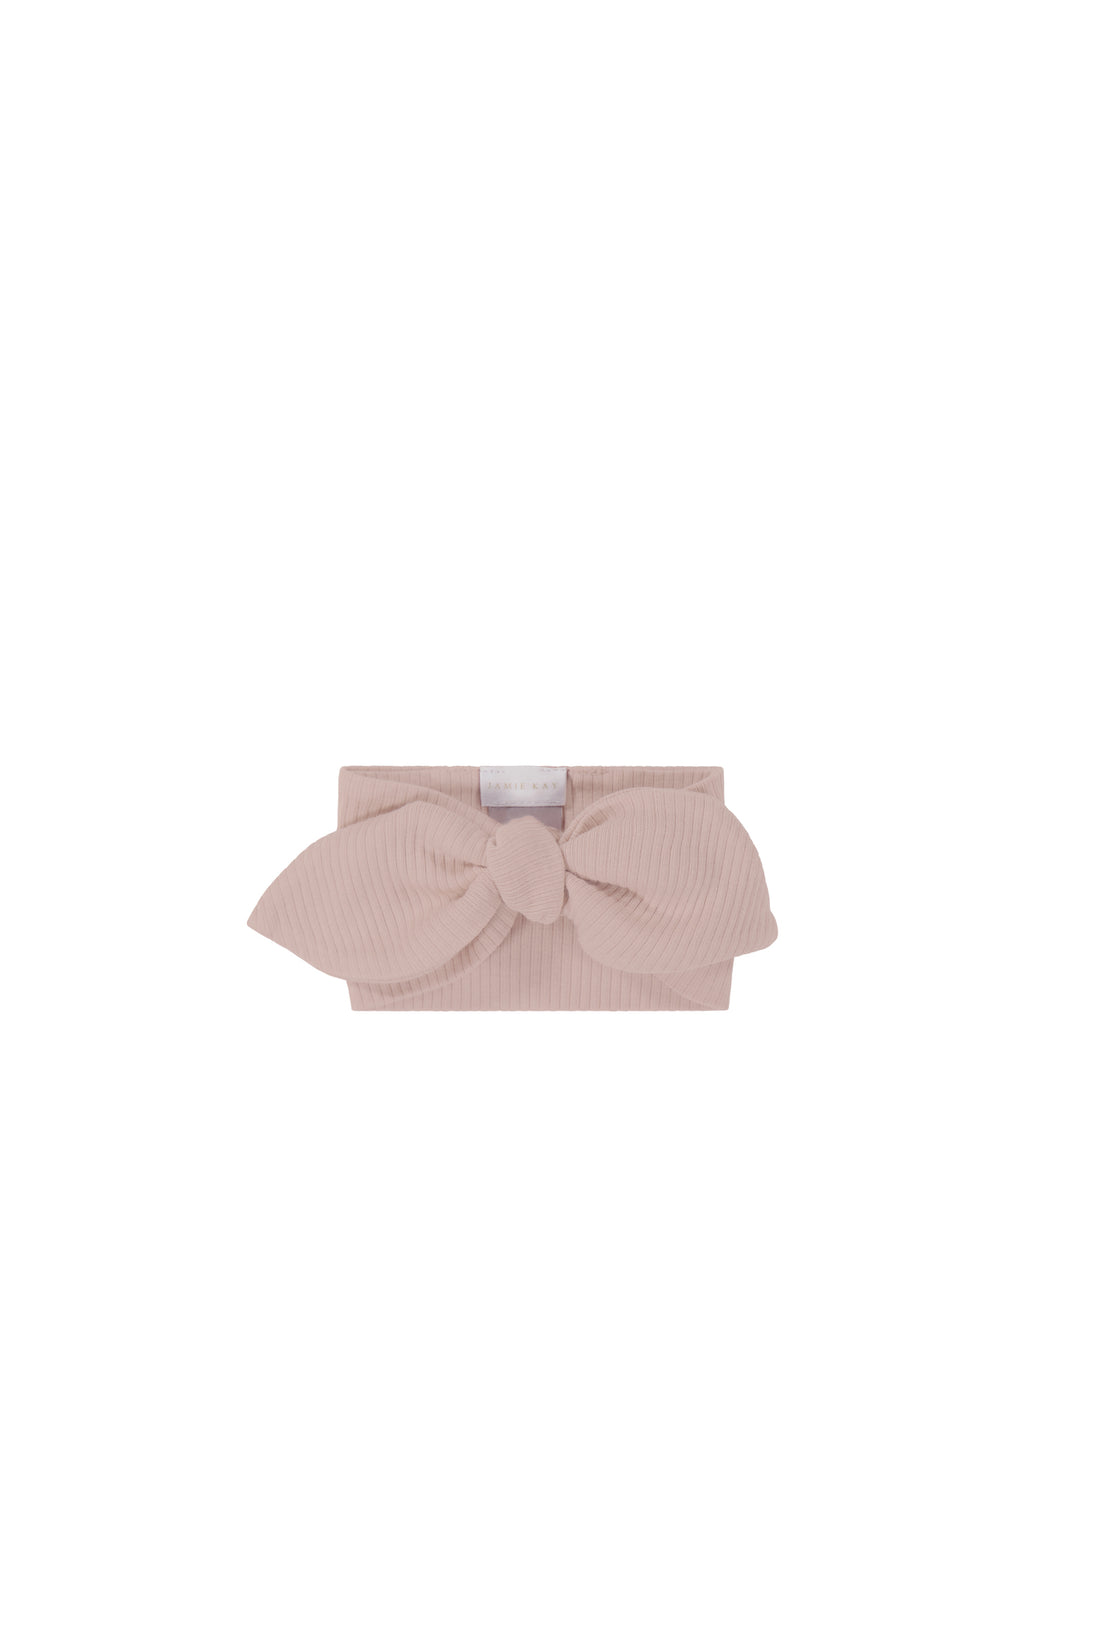 Organic Cotton Modal Lilian Headband - Provence Dusty Pink